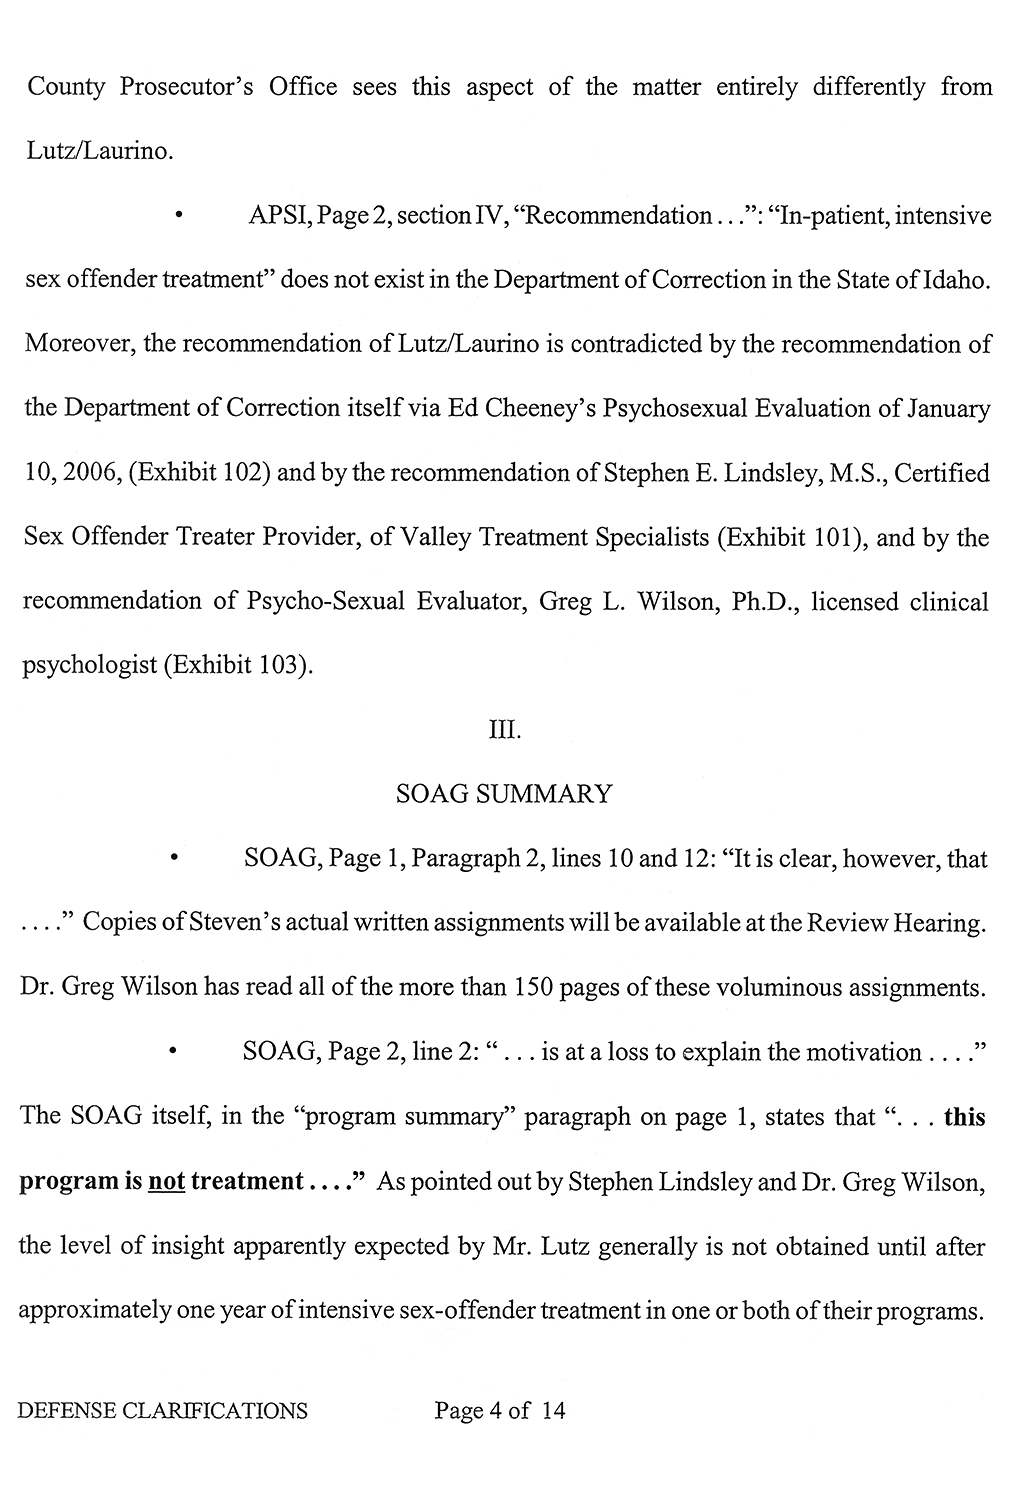 Defense Clarifications page 4